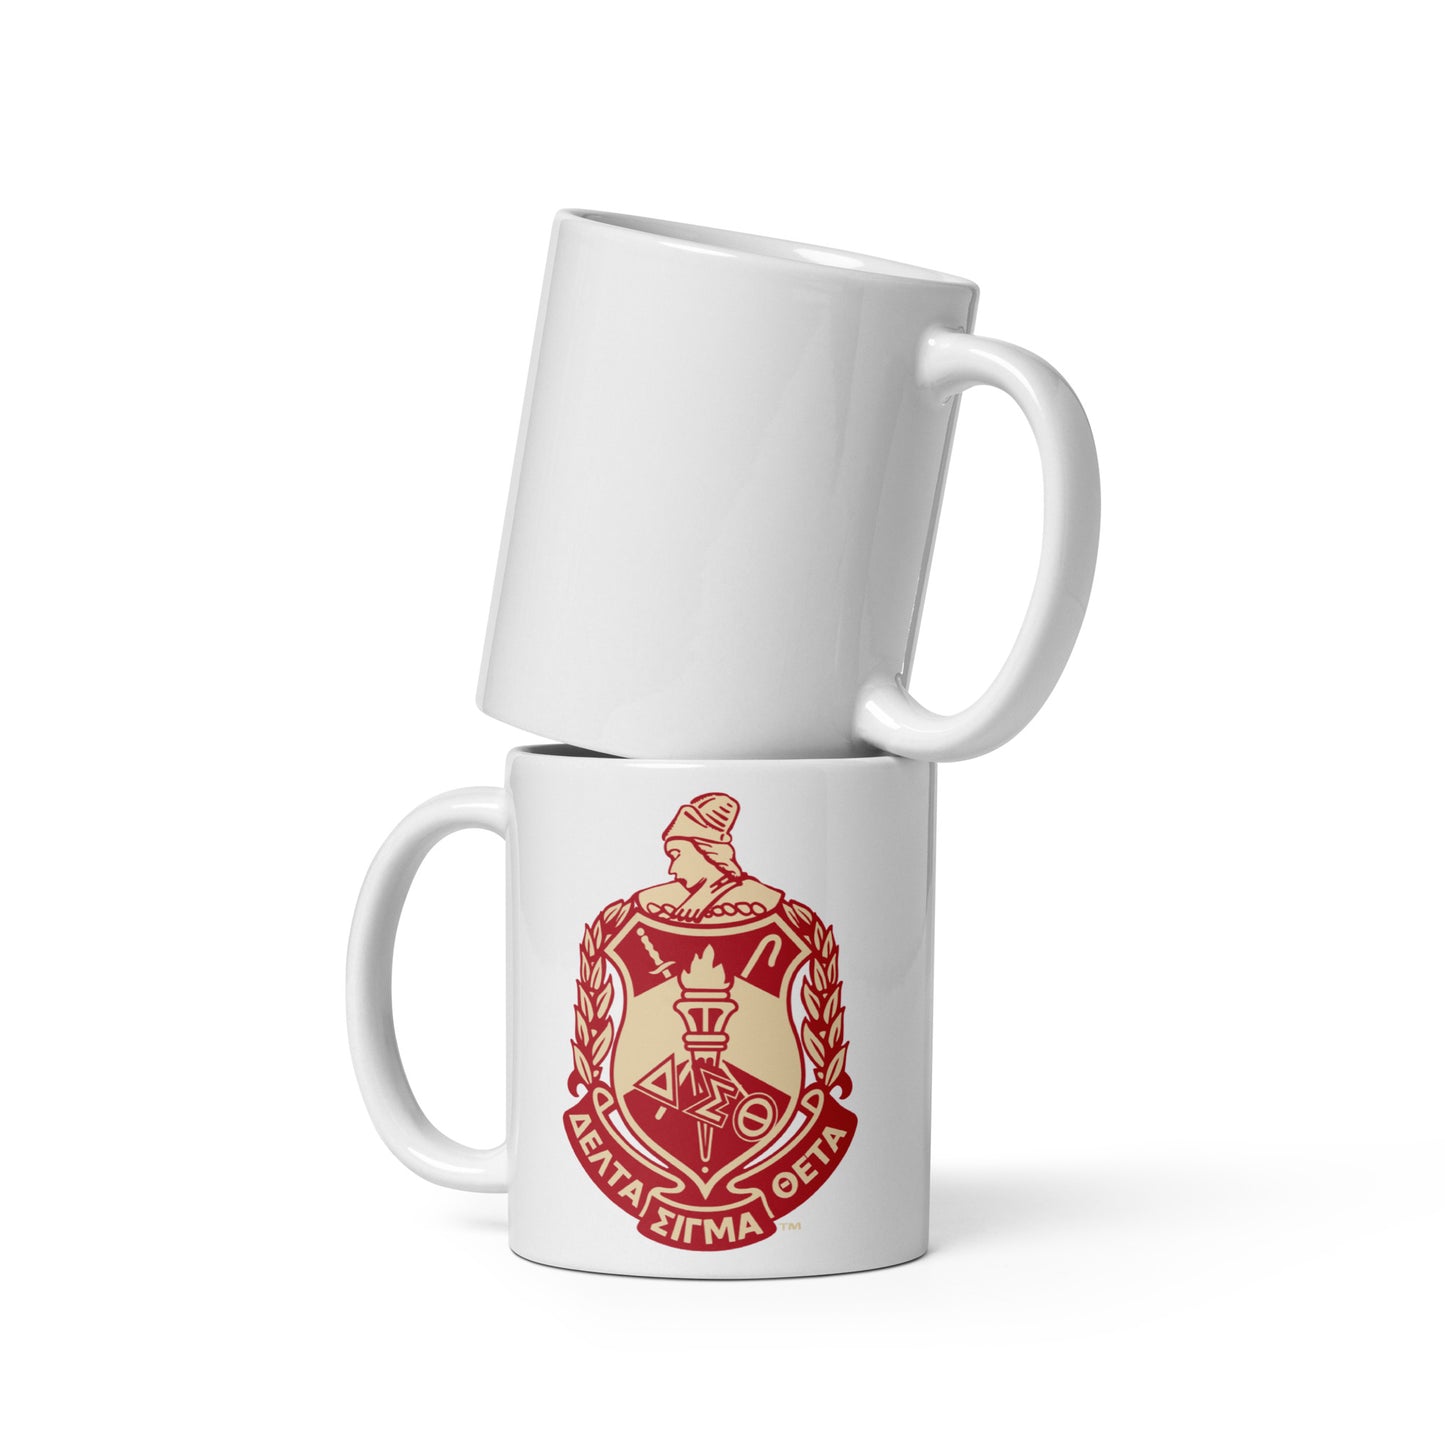 Delta Sigma Theta Crest Mug